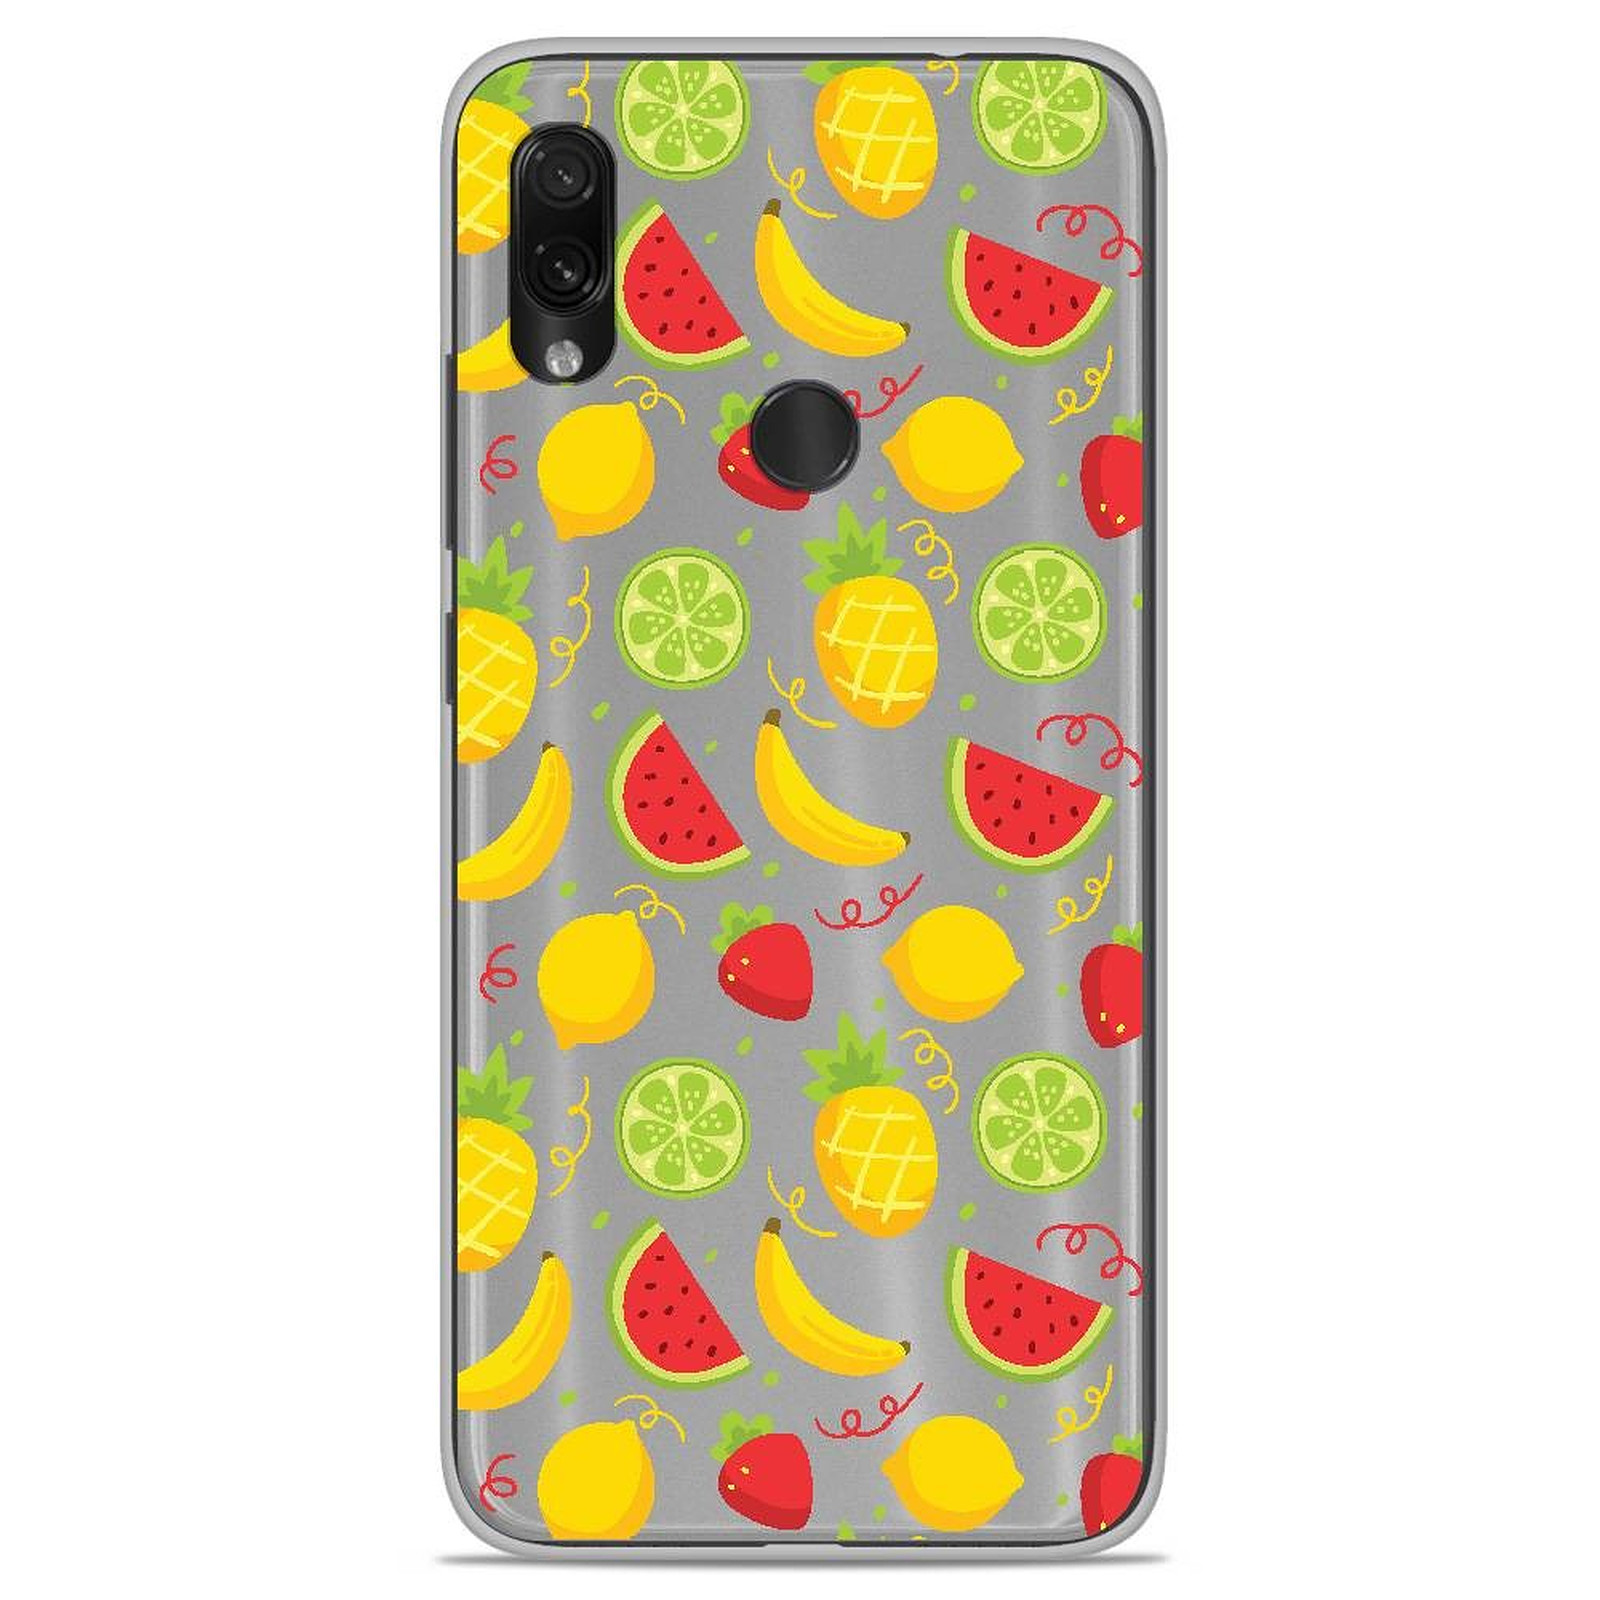 1001 Coques Coque silicone gel Xiaomi Redmi Note 7 / Note 7 Pro motif Fruits tropicaux - Coque telephone 1001Coques